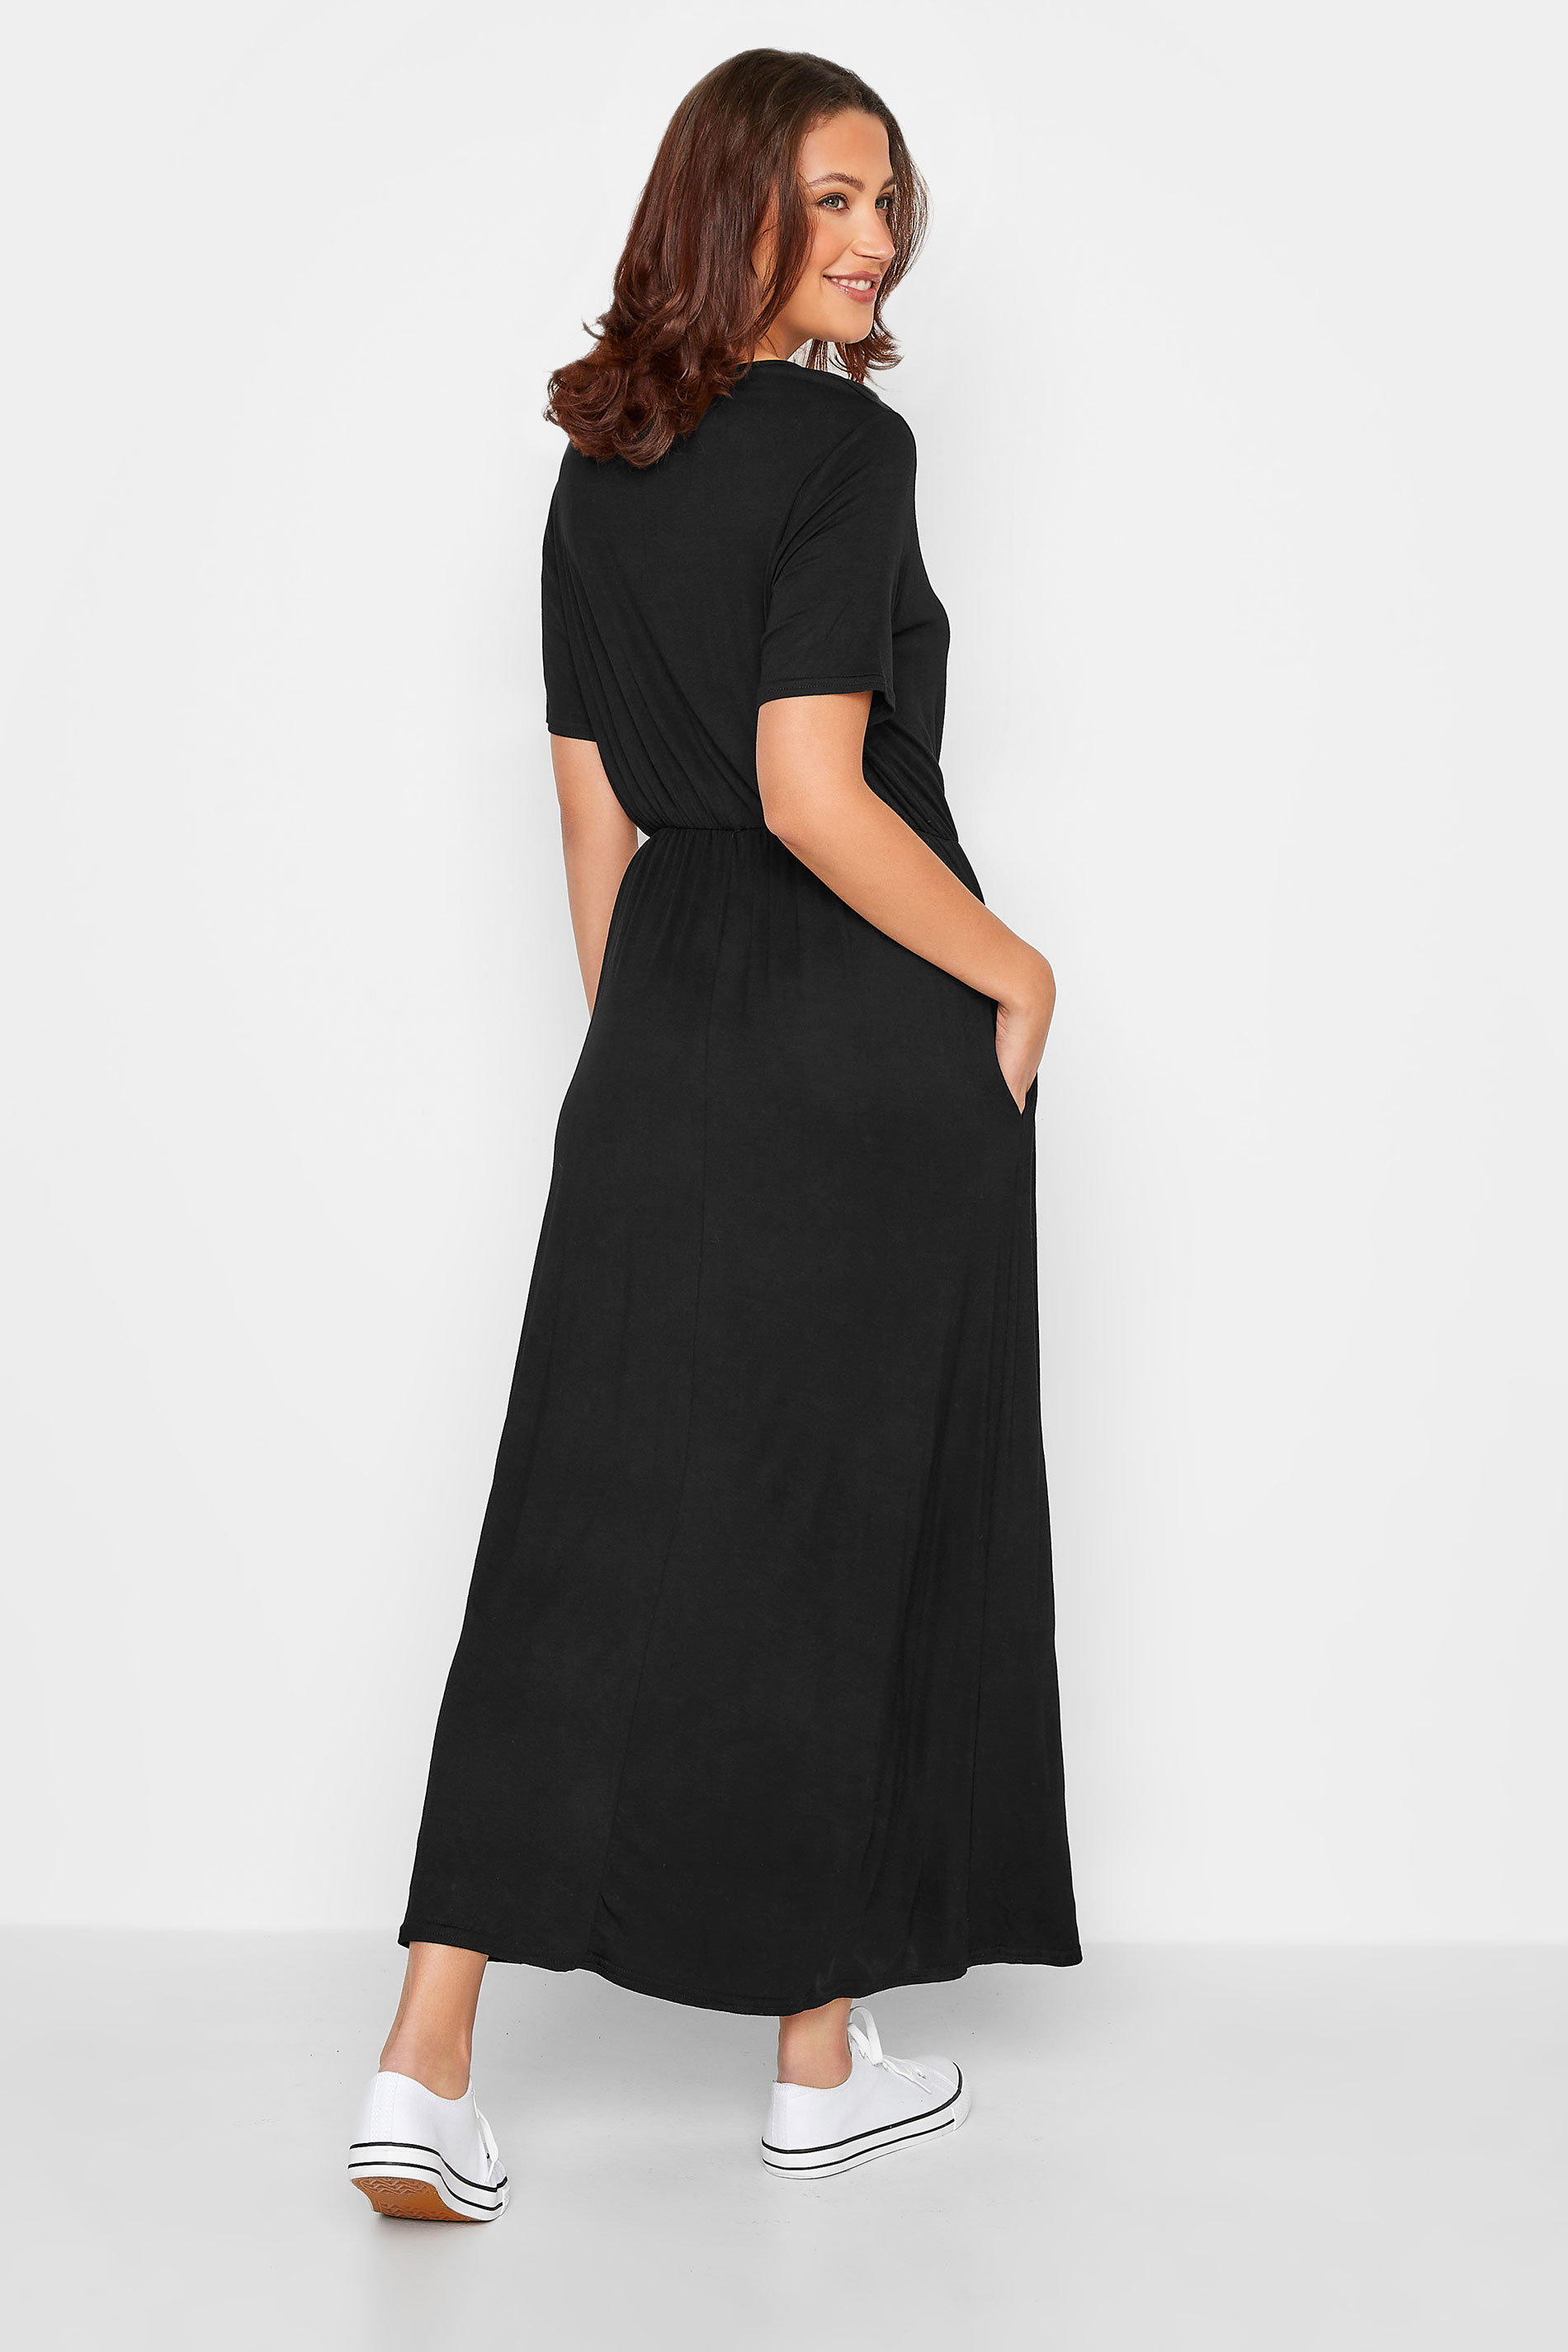 LTS Black Pocket Midaxi Dress | Long Tall Sally 3